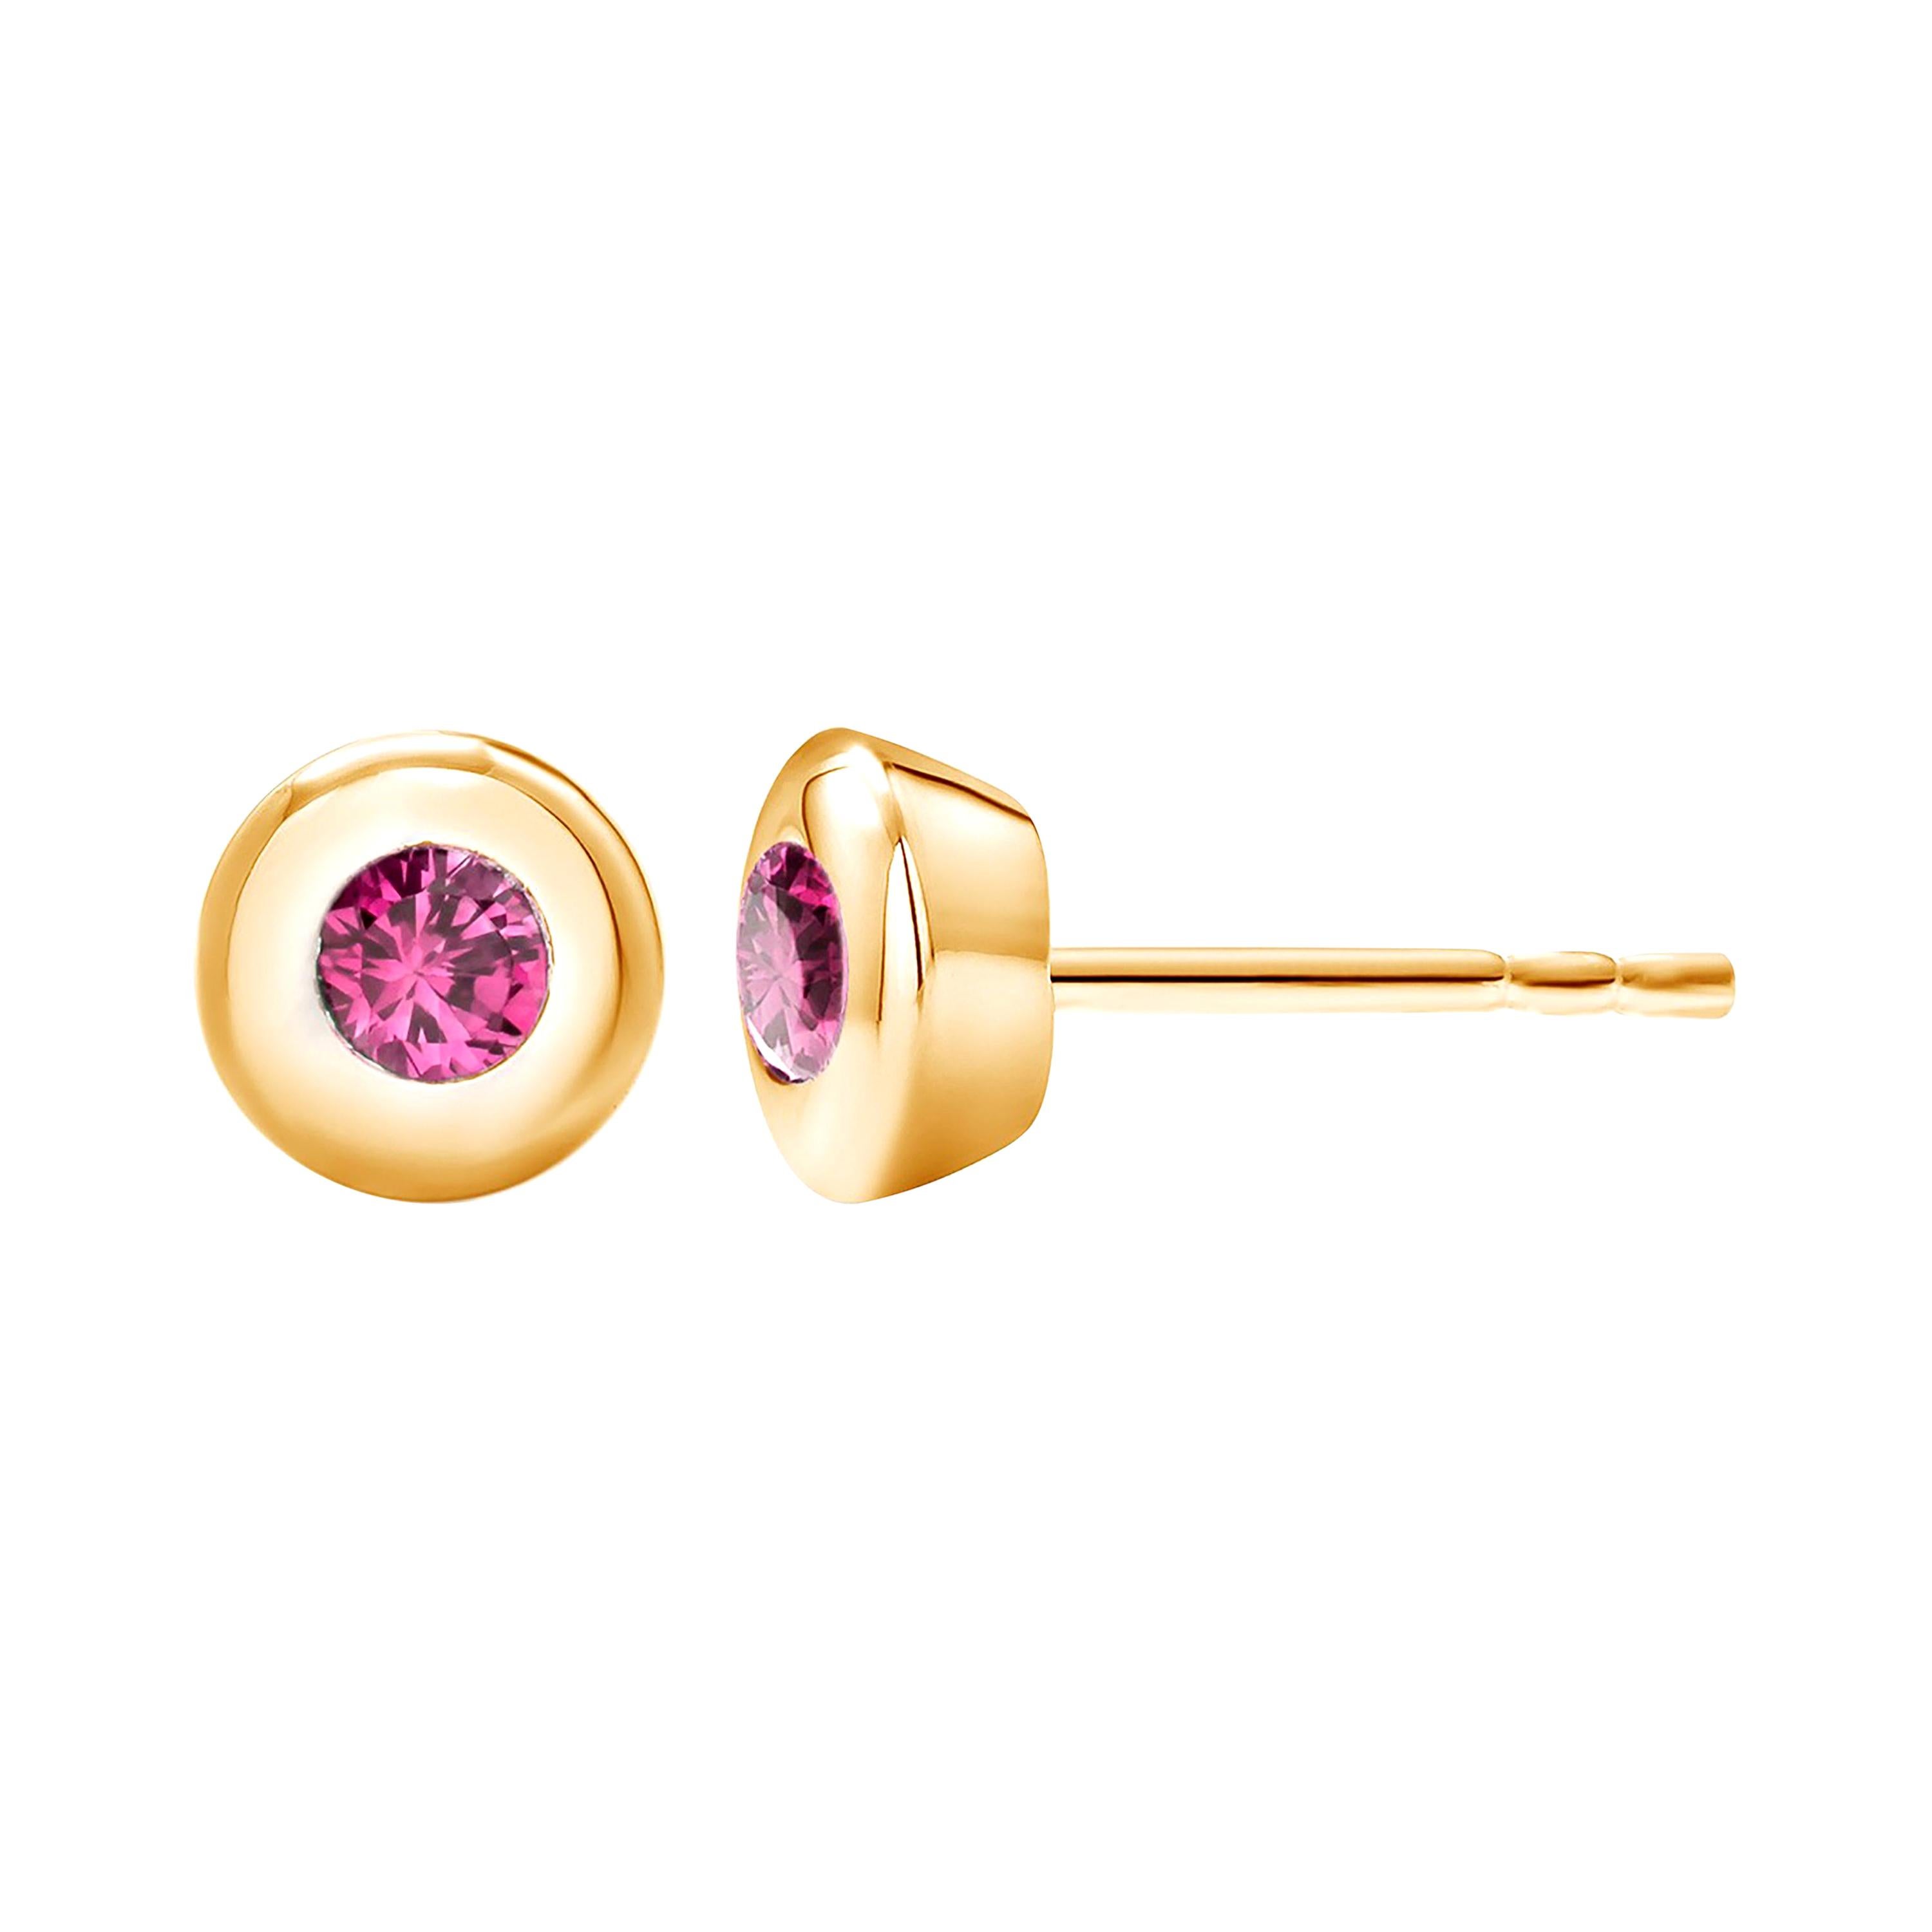 14 Karat Yellow Gold Bezel Set Ruby Stud Earrings Weighing 0.30 Carat